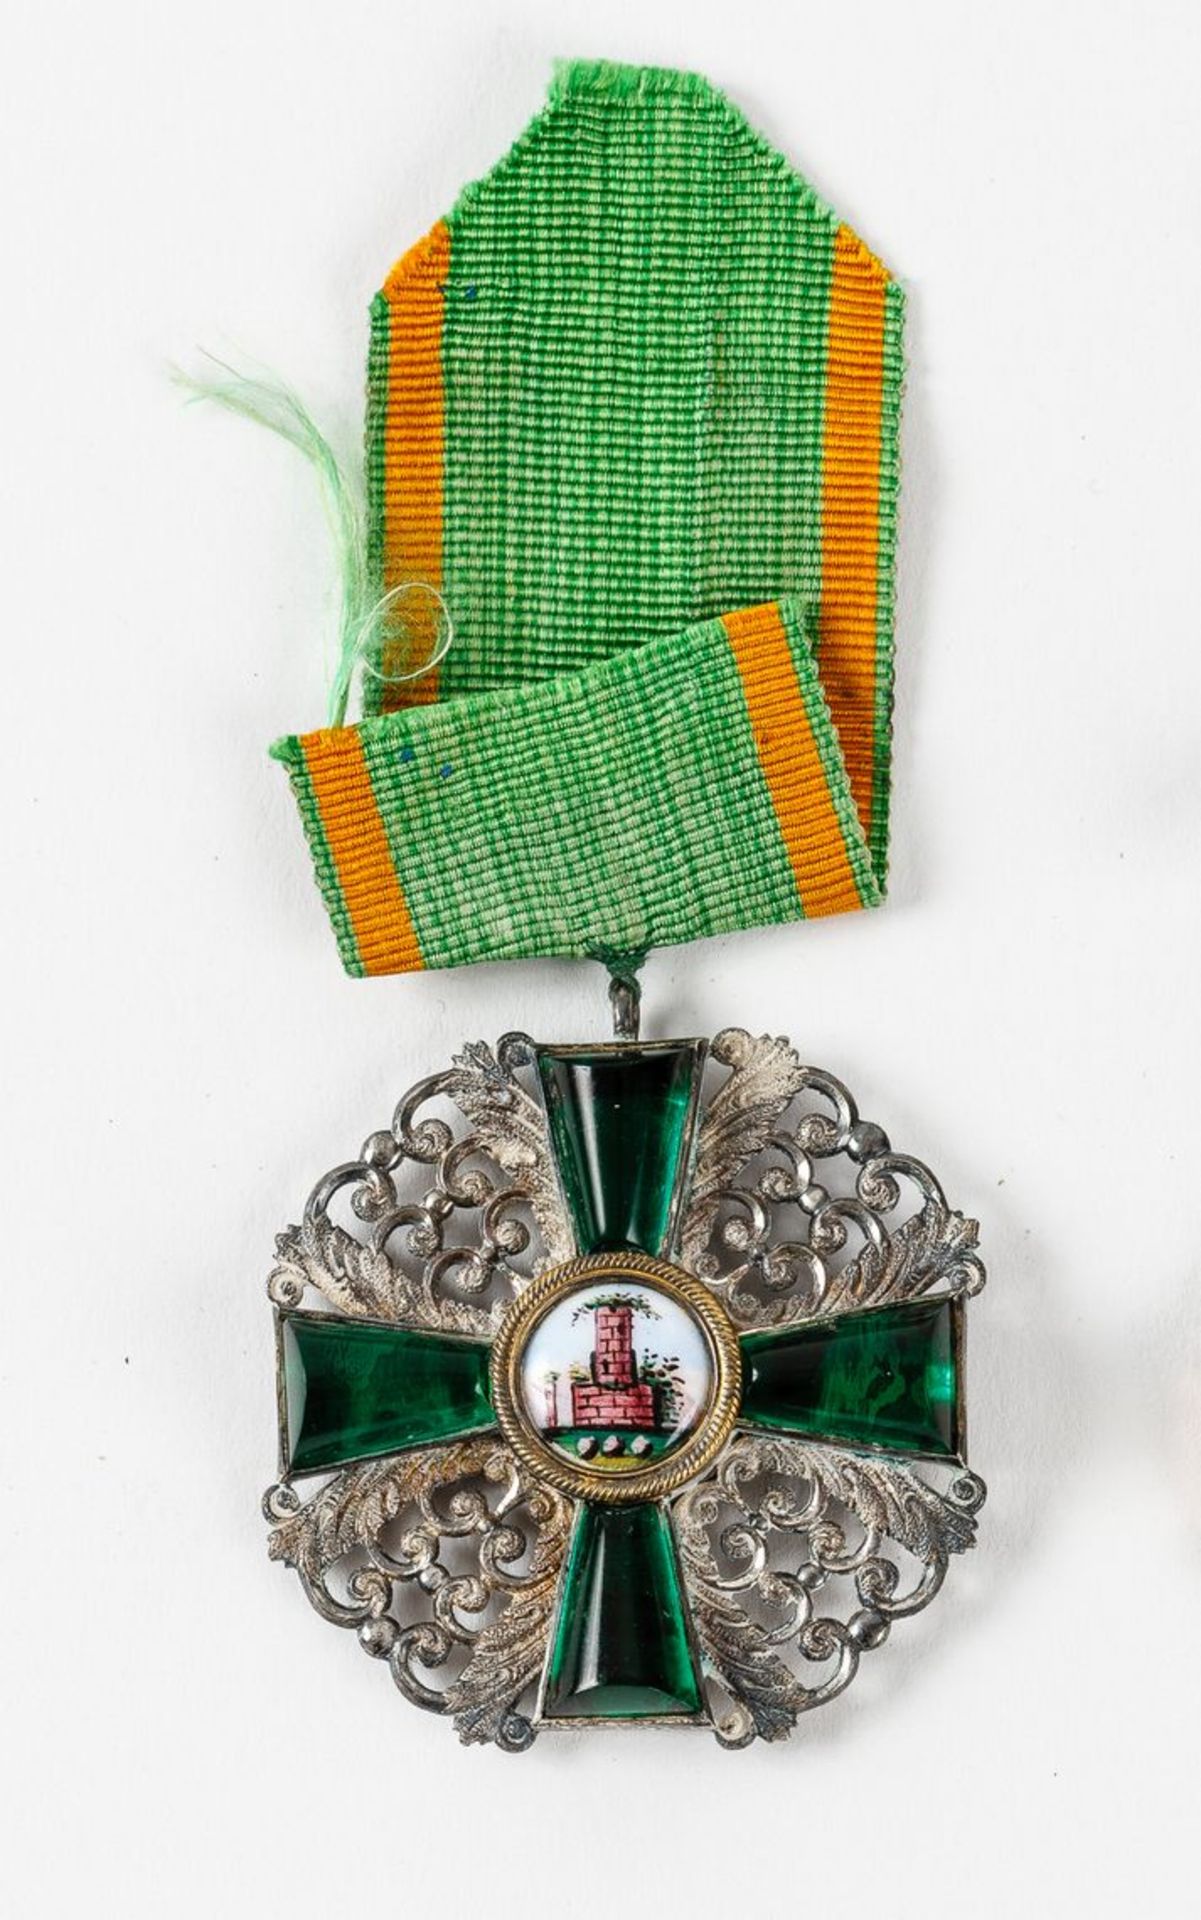 BadenOrden vom Zähringer Löwen Ritterkreuz 2. Klasse, am Bande. Kreuz Silber, Kreuzarme aus grünem